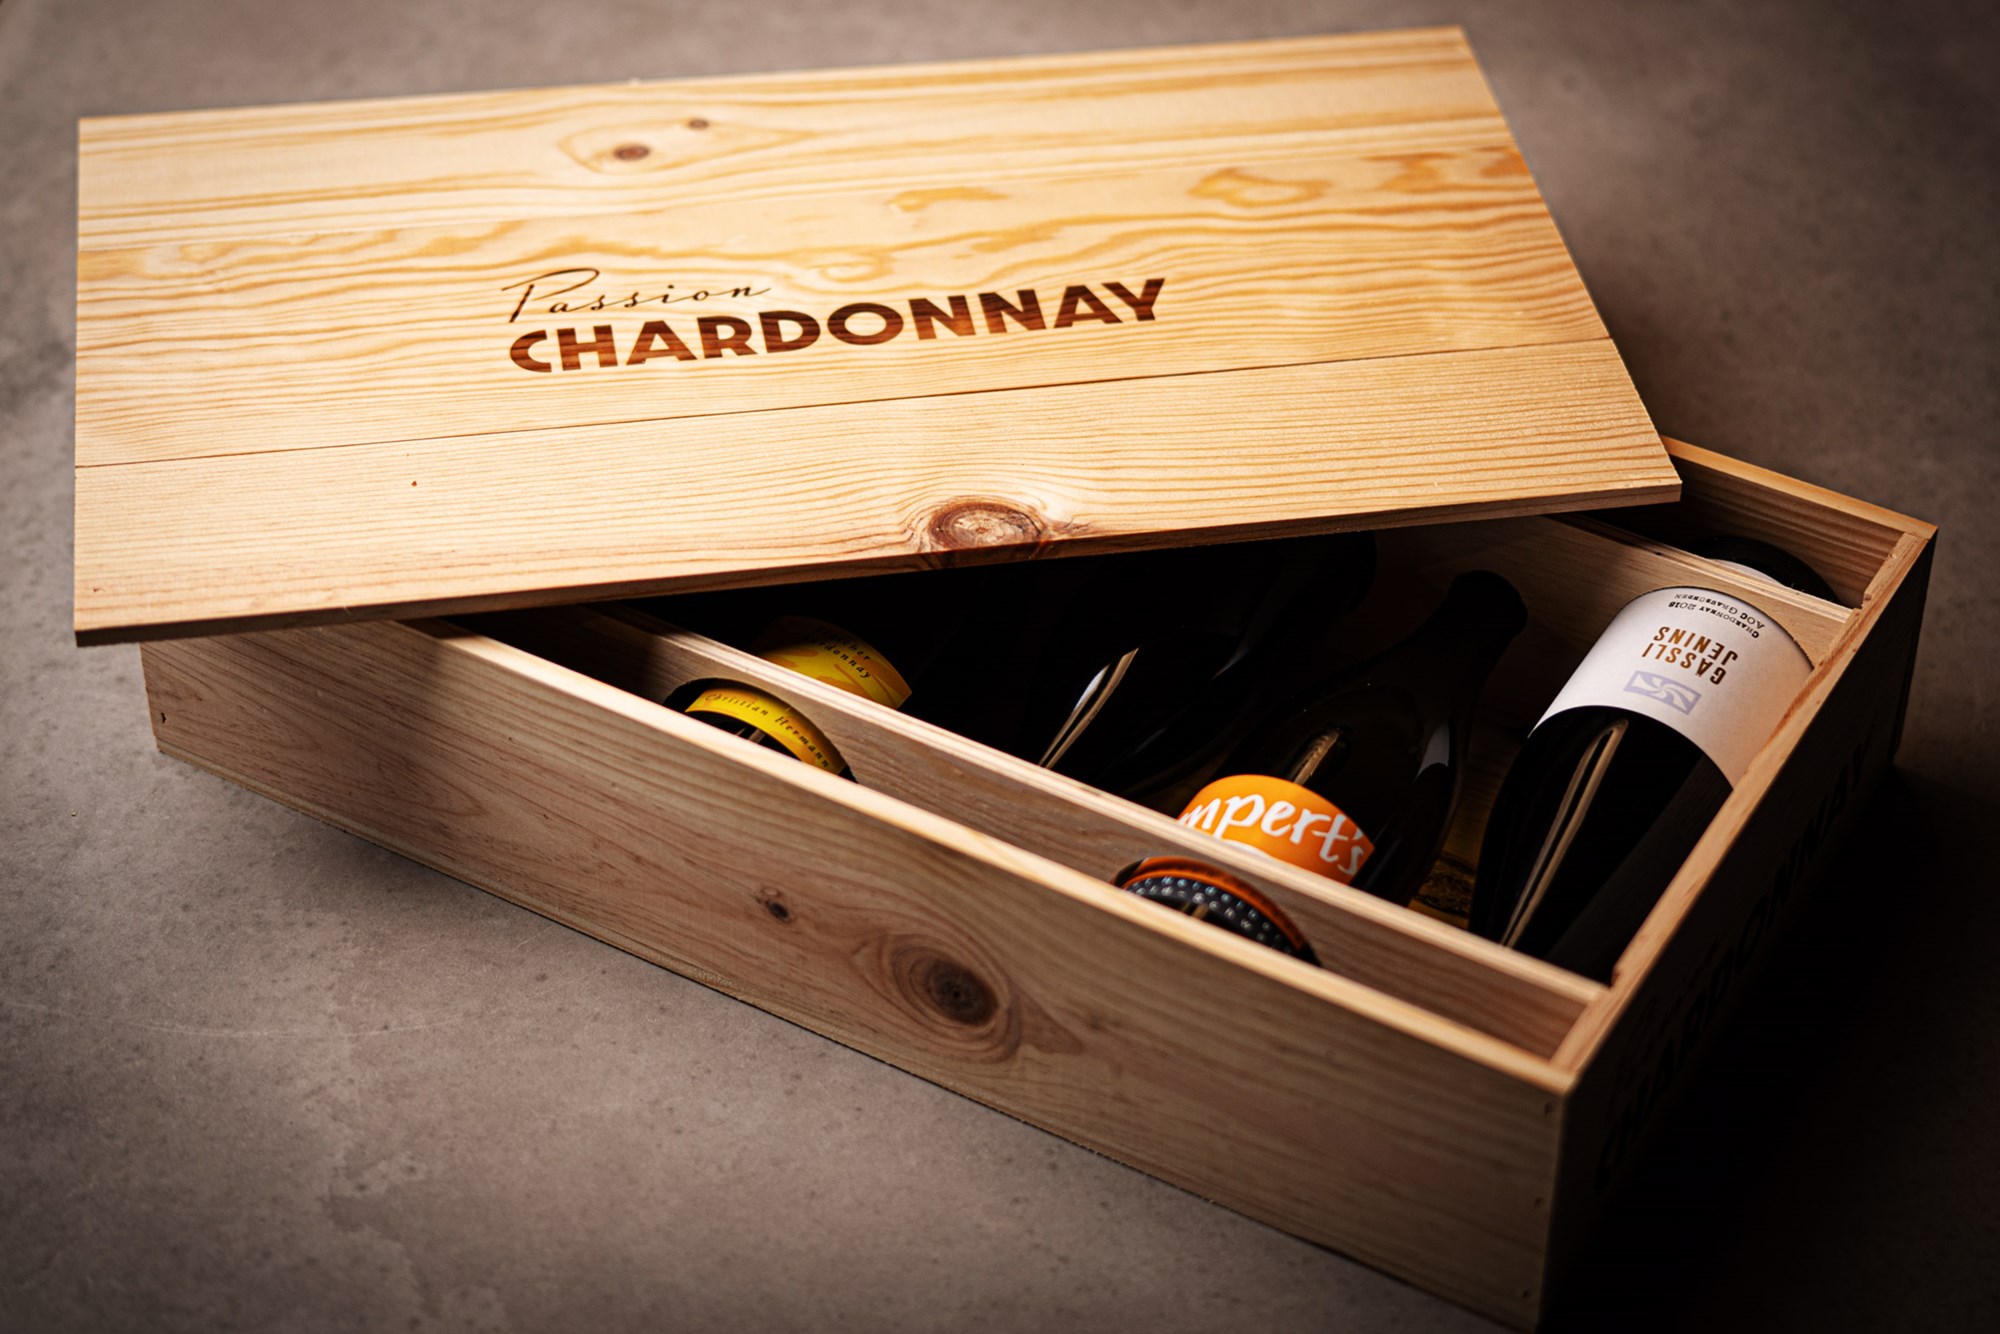 Passion Chardonnay Kiste